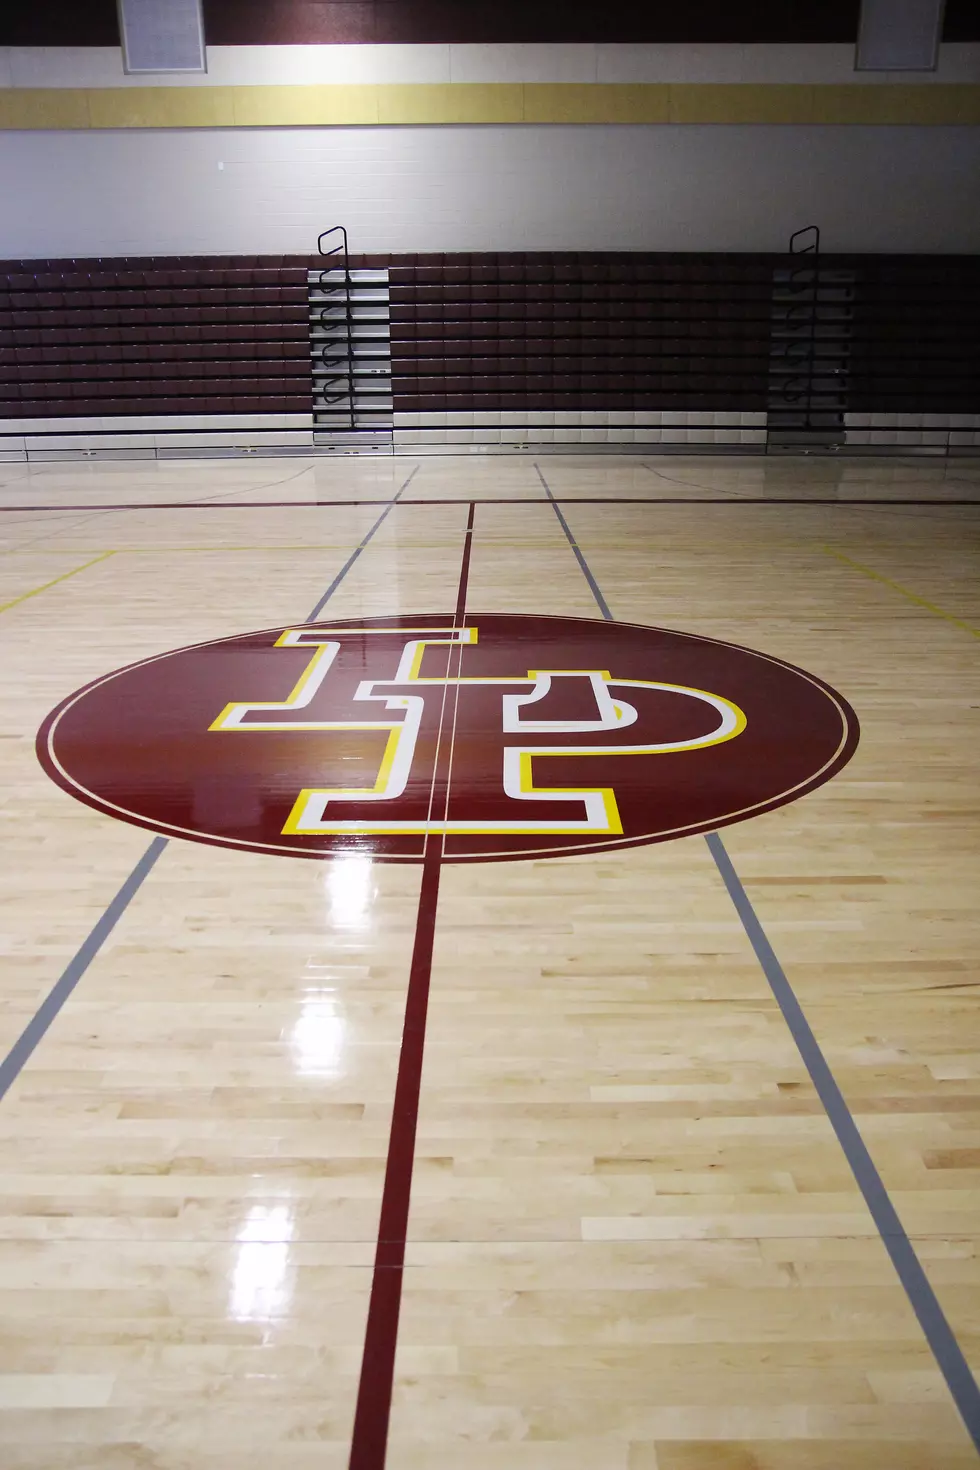 BREAKING: Laramie High School Basketball Games Cancelled